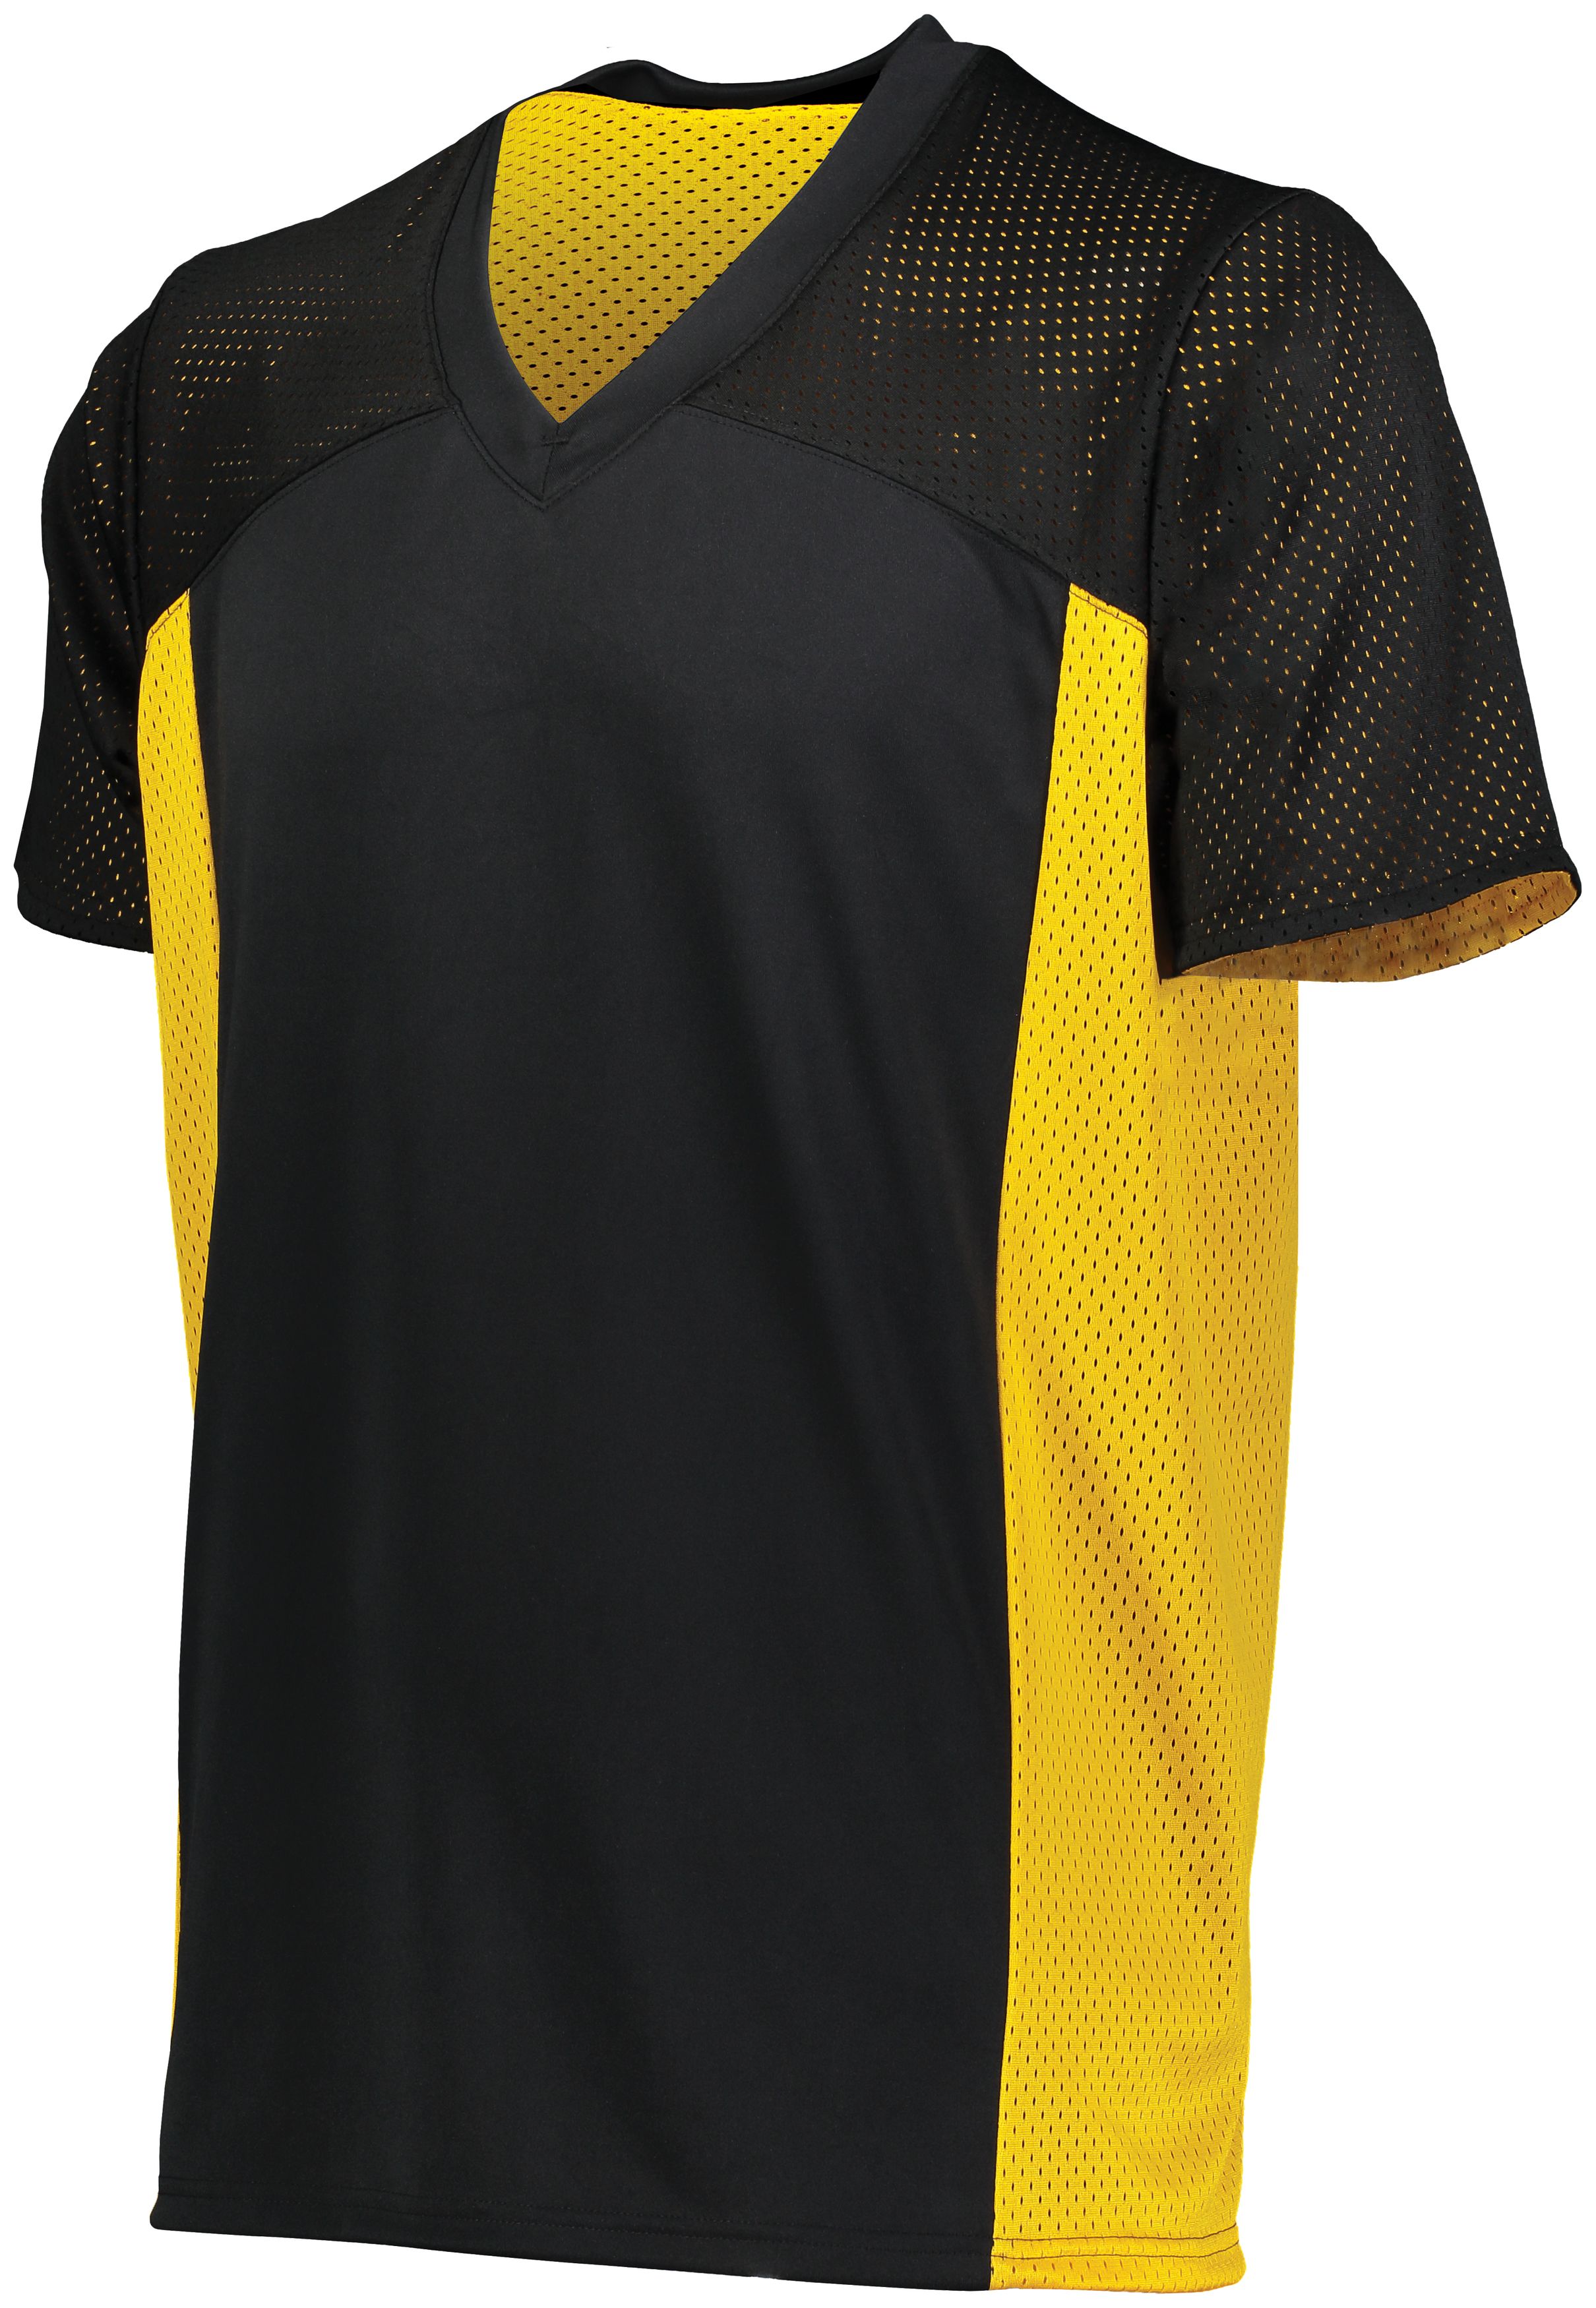 Flag Football -7ON7 Short Sleeve Compresson shirts and shorts set